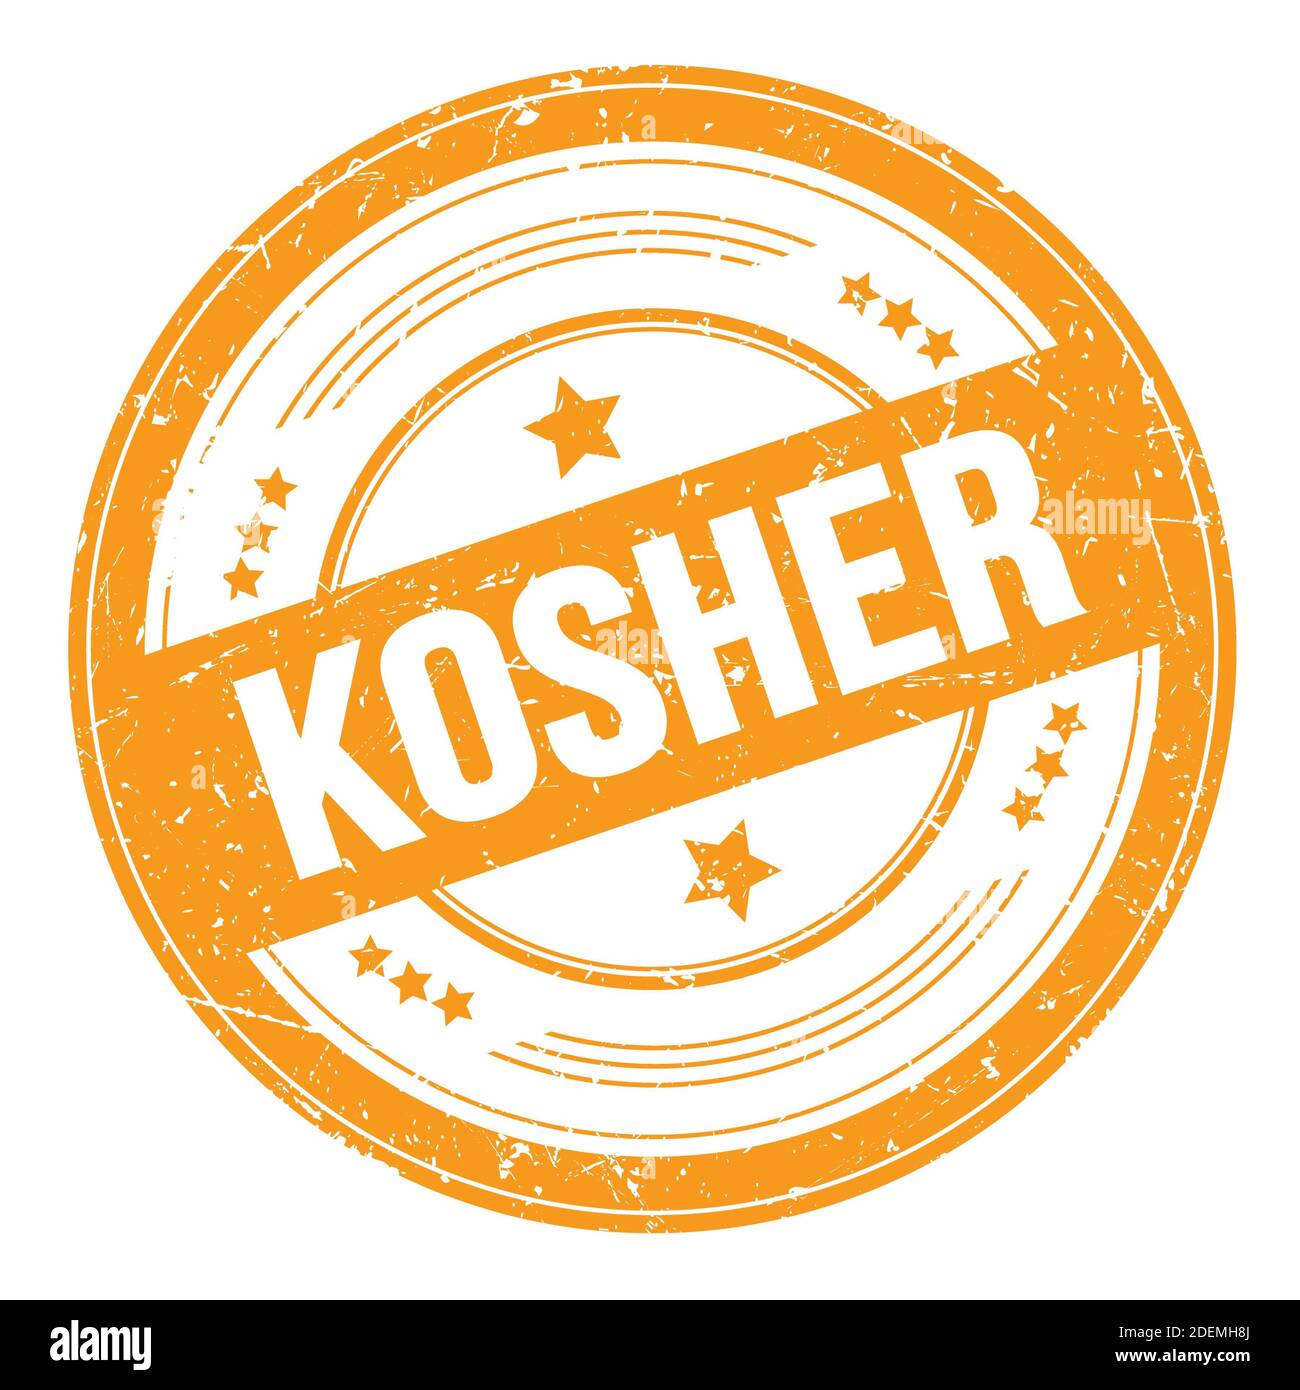 KOSHER text on orange round grungy texture stamp. Stock Photo